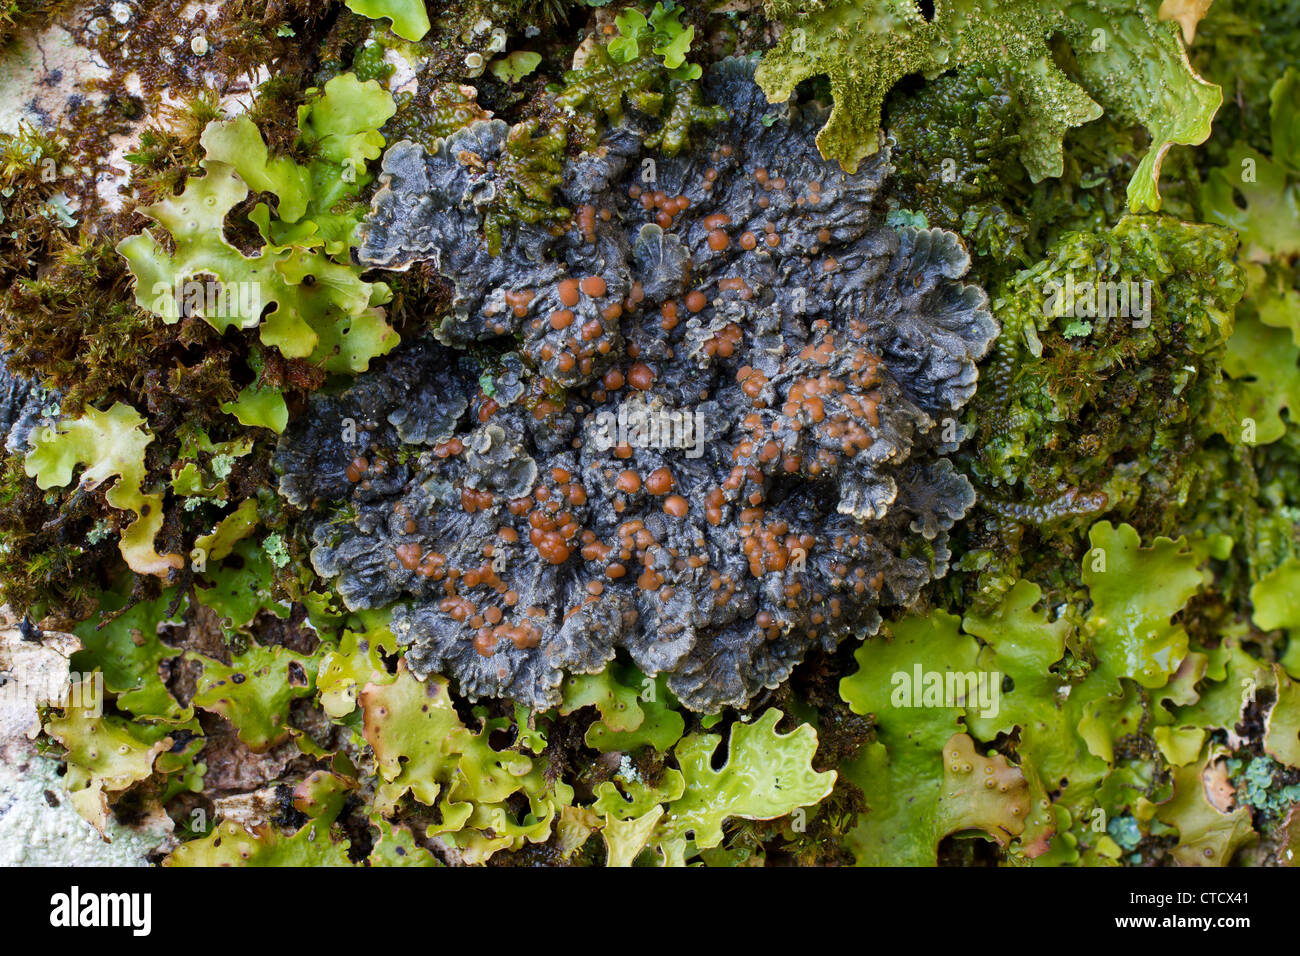 Plum-fruited felt lichen, Degelia plumbea growing on old ash trunk with Tree lungwort, Lobaria pulmonaria Stock Photo